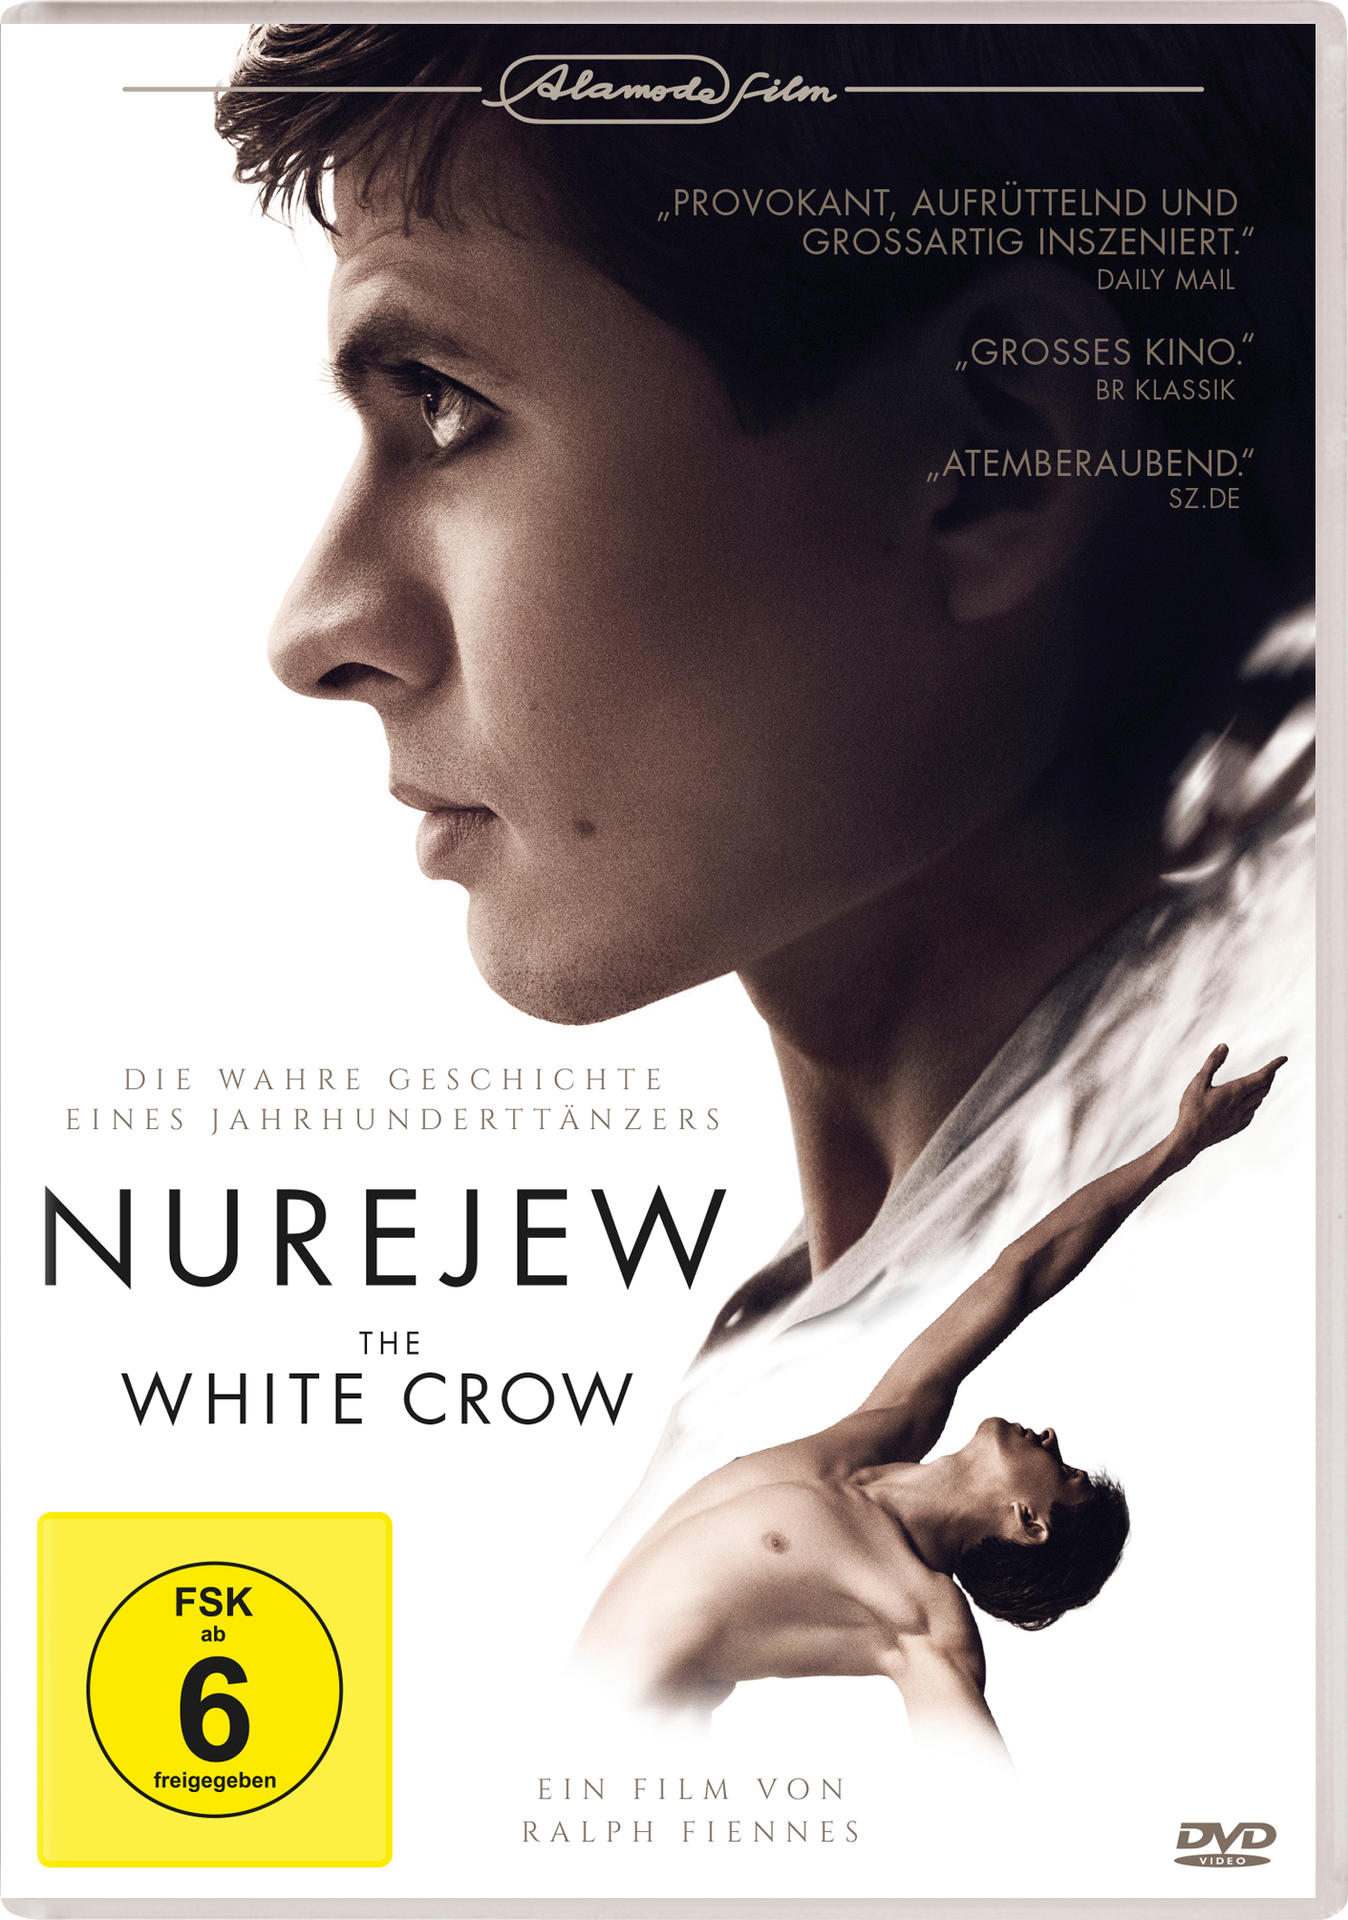 The - Nurejew Crow White DVD